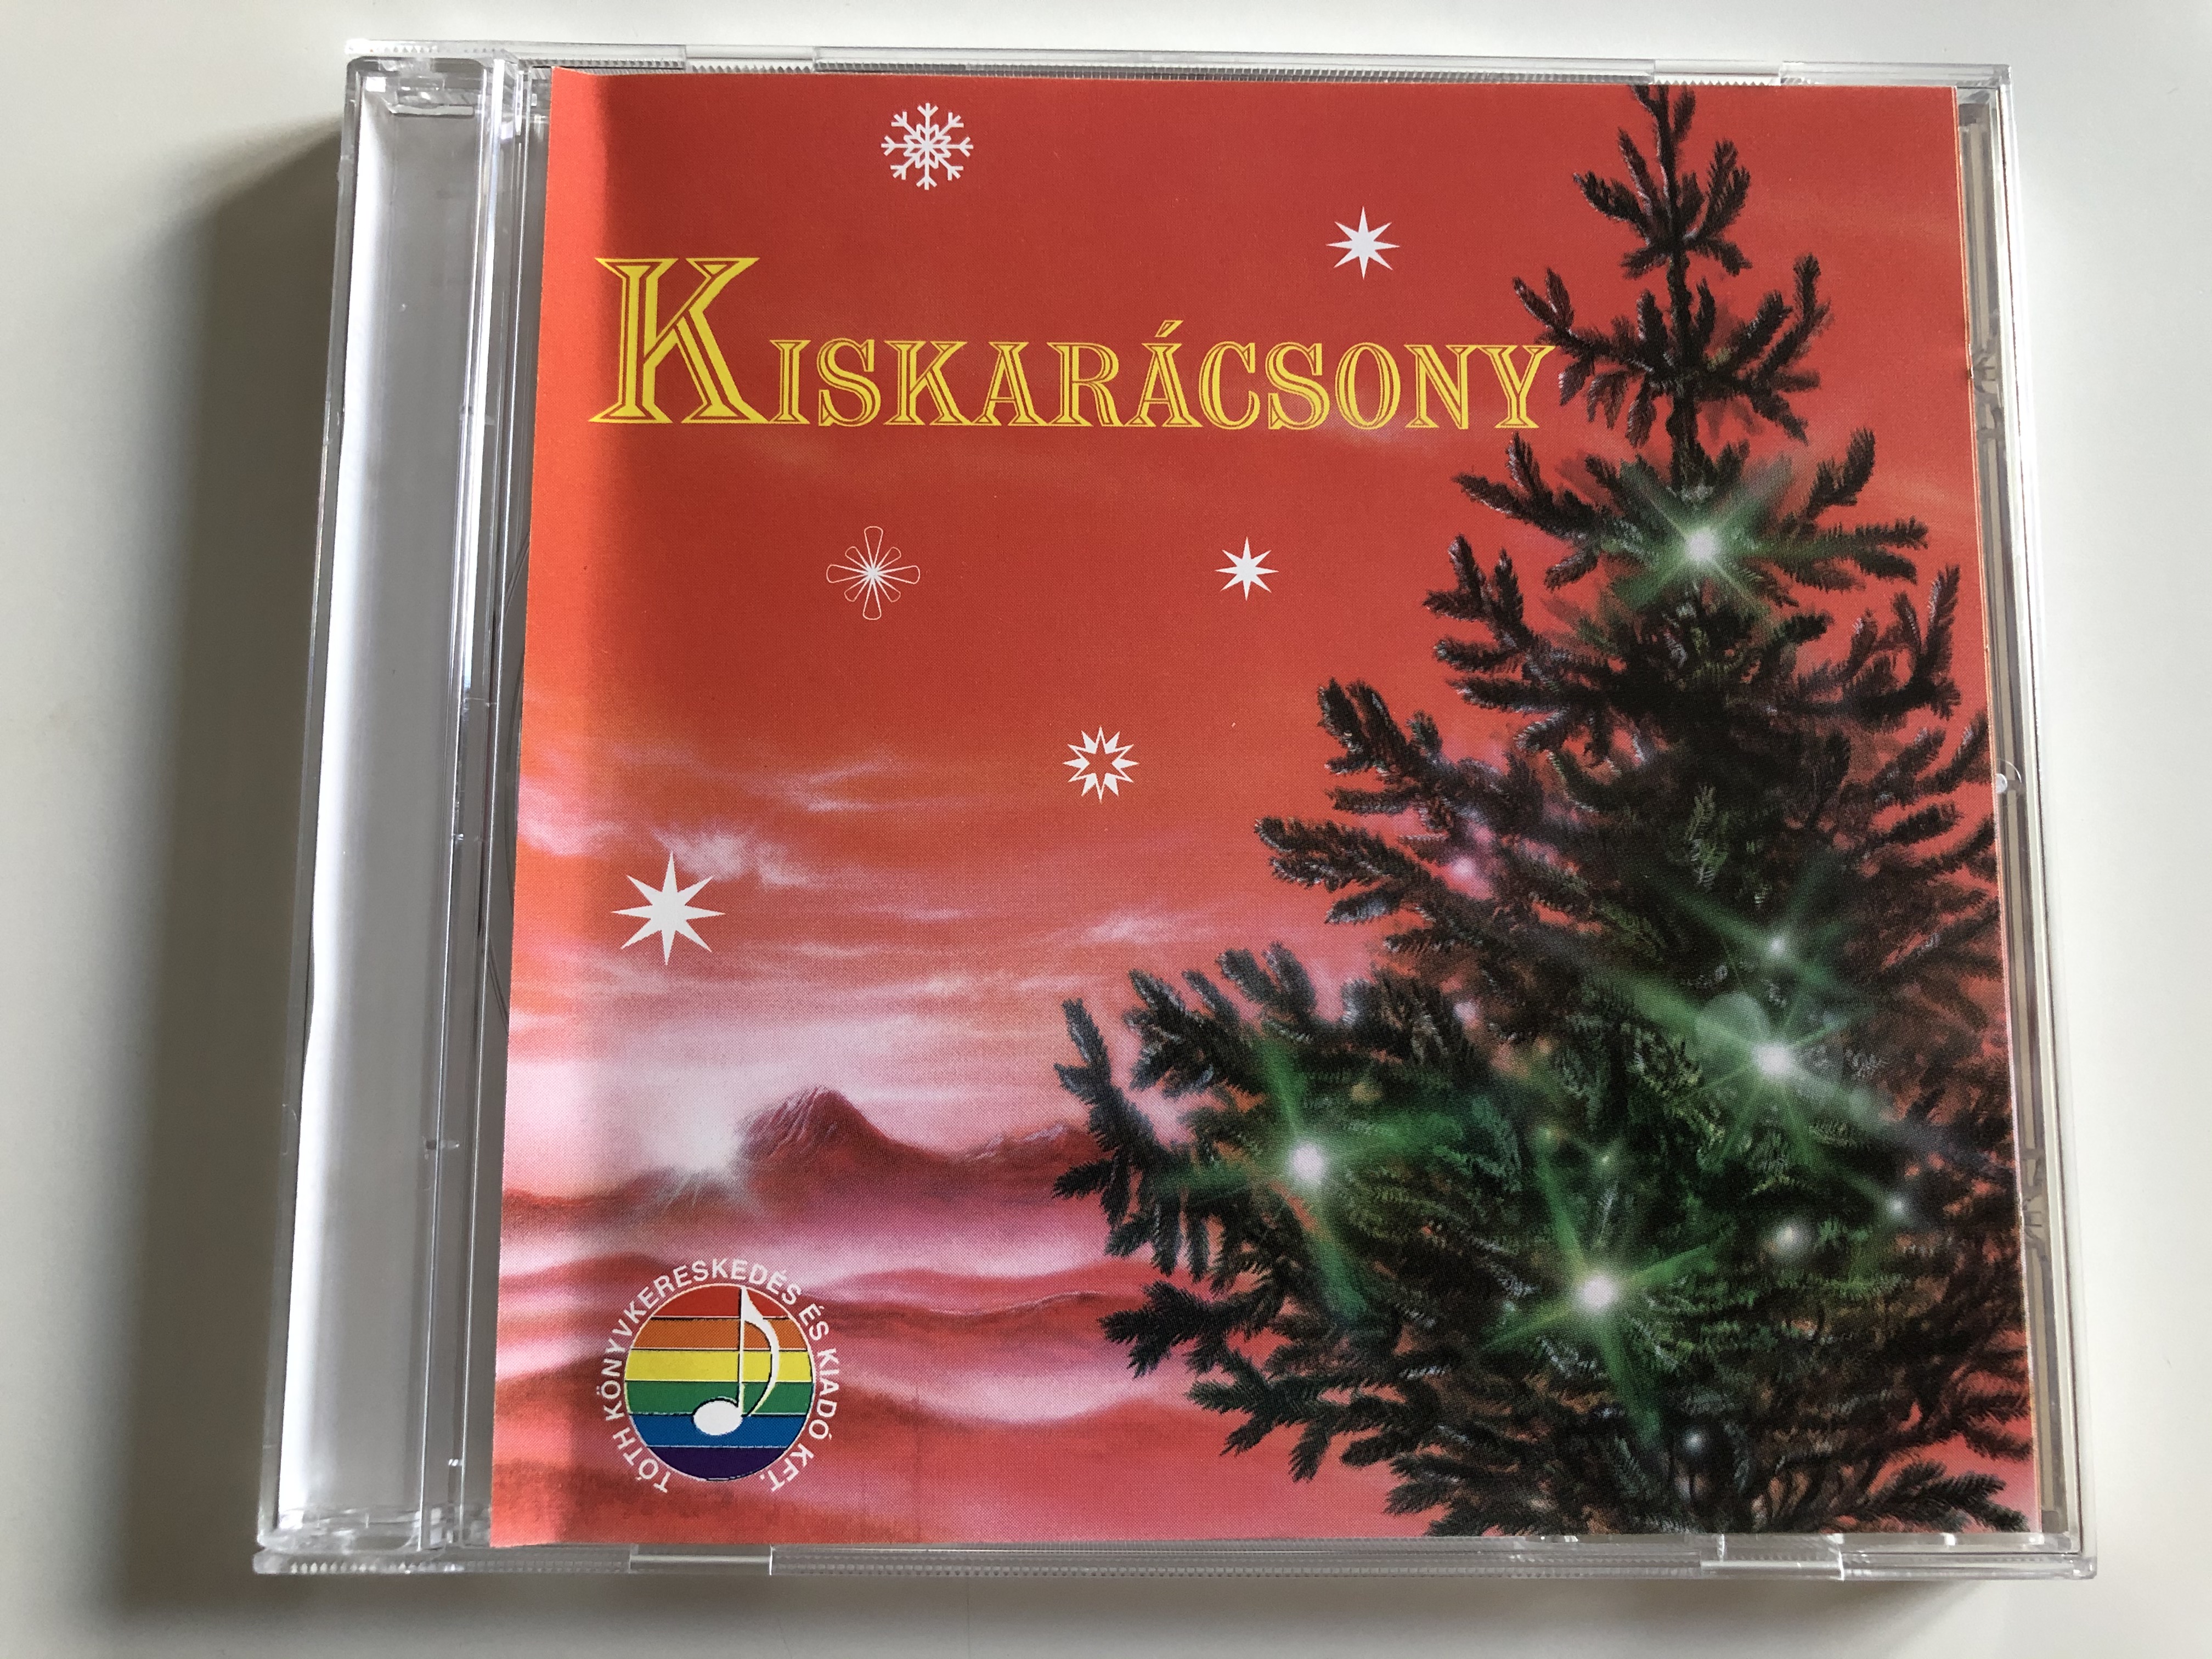 kiskaracsony-toth-konykereskedes-es-kiado-kft.-audio-cd-tkk-003-1-.jpg